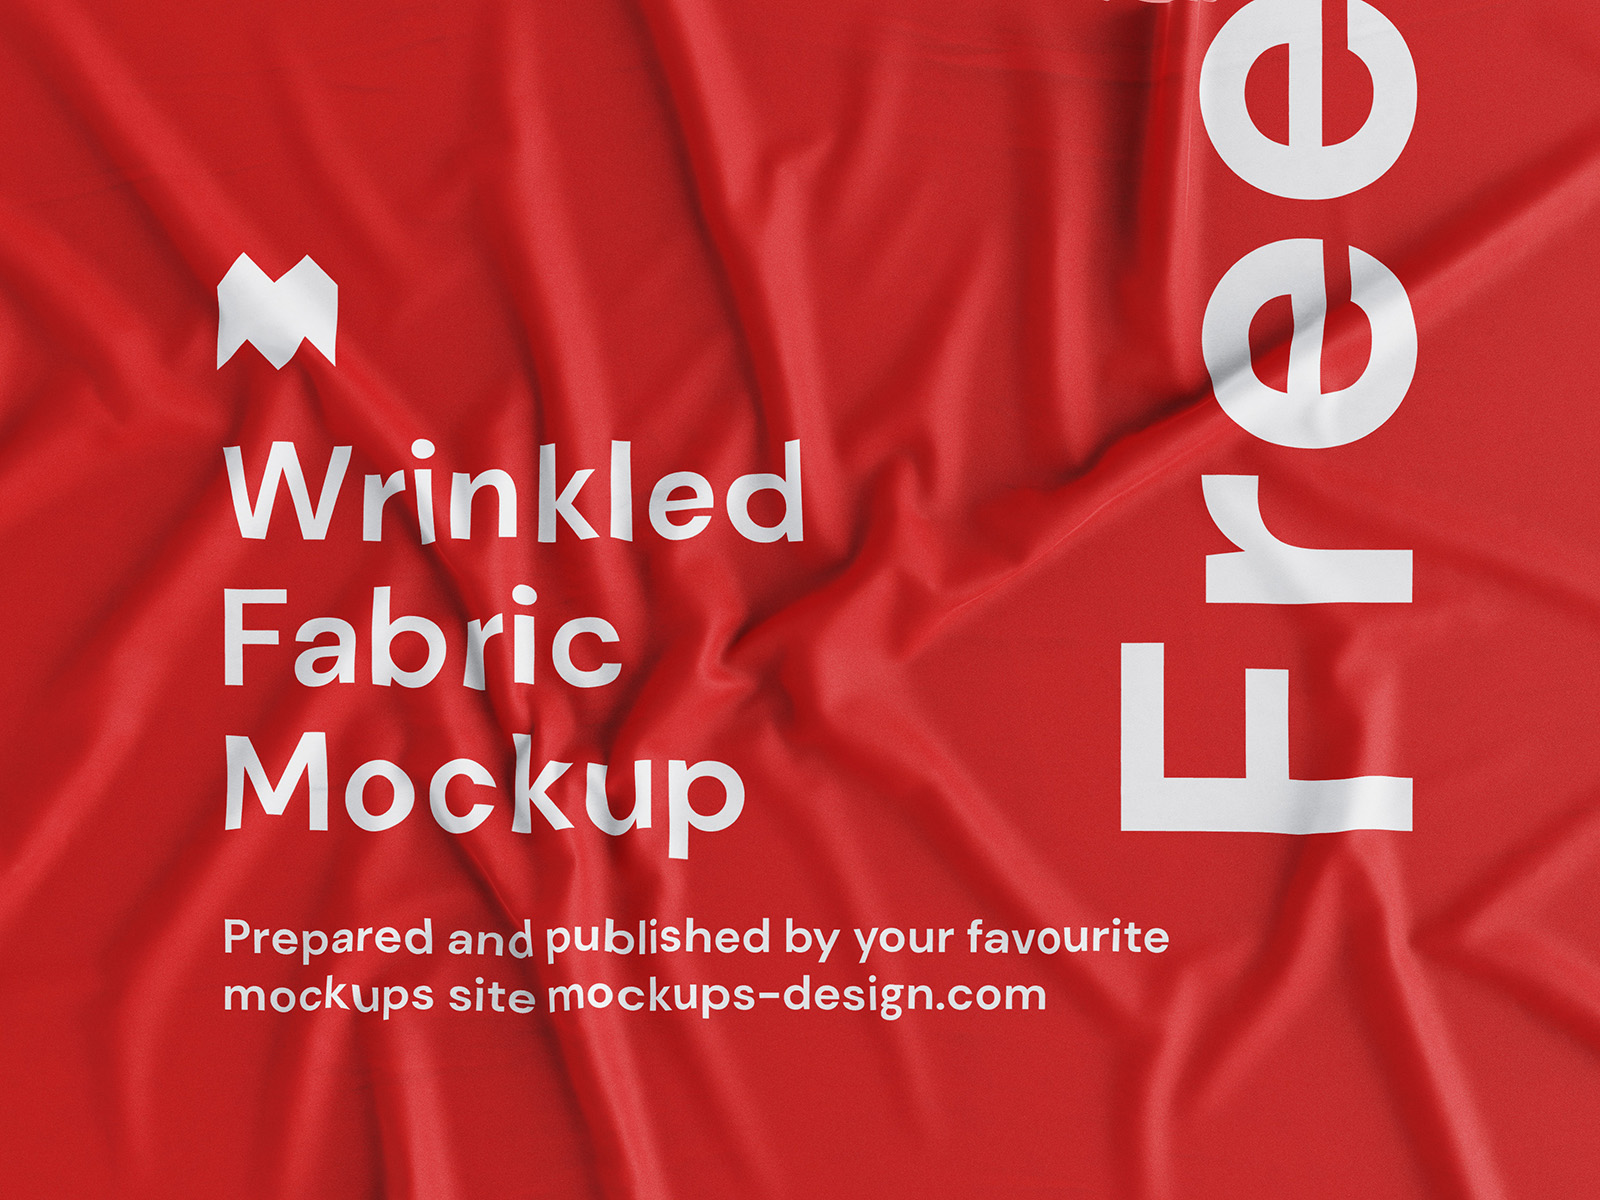 Free wrinkled fabric mockup